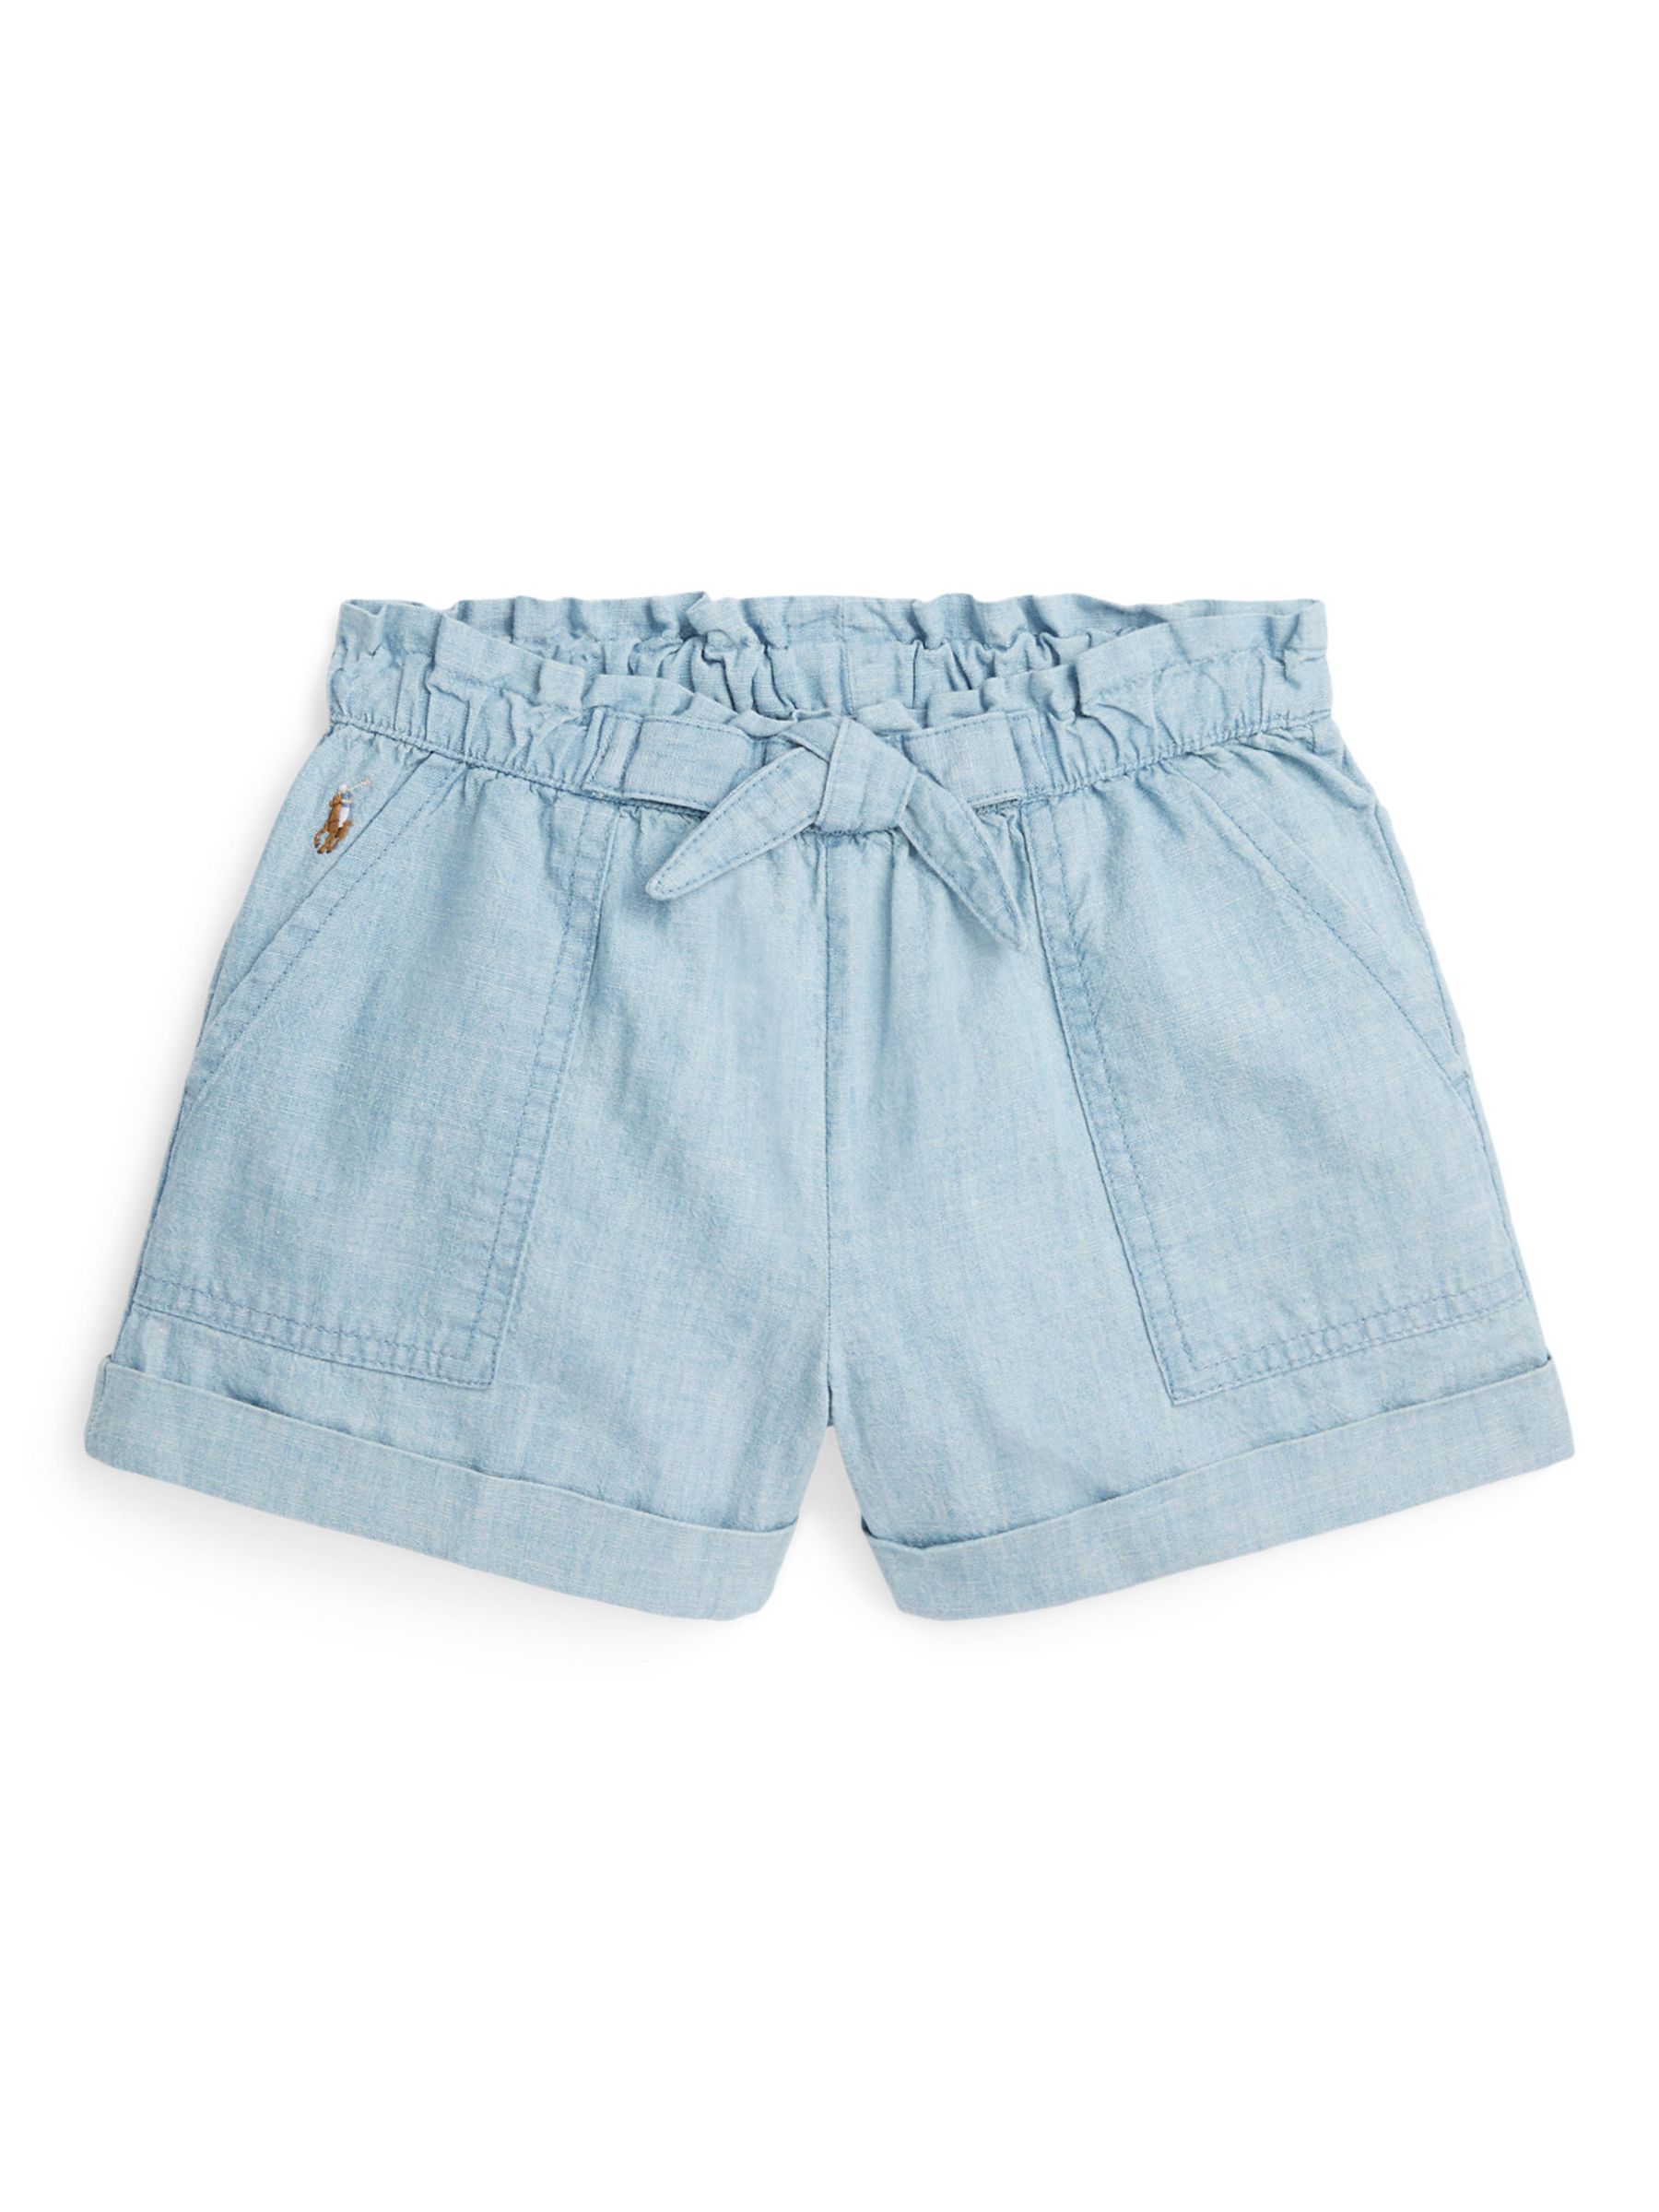 Ralph Lauren Kids' Camp Bottom Shorts, Medium Wash, 4 years